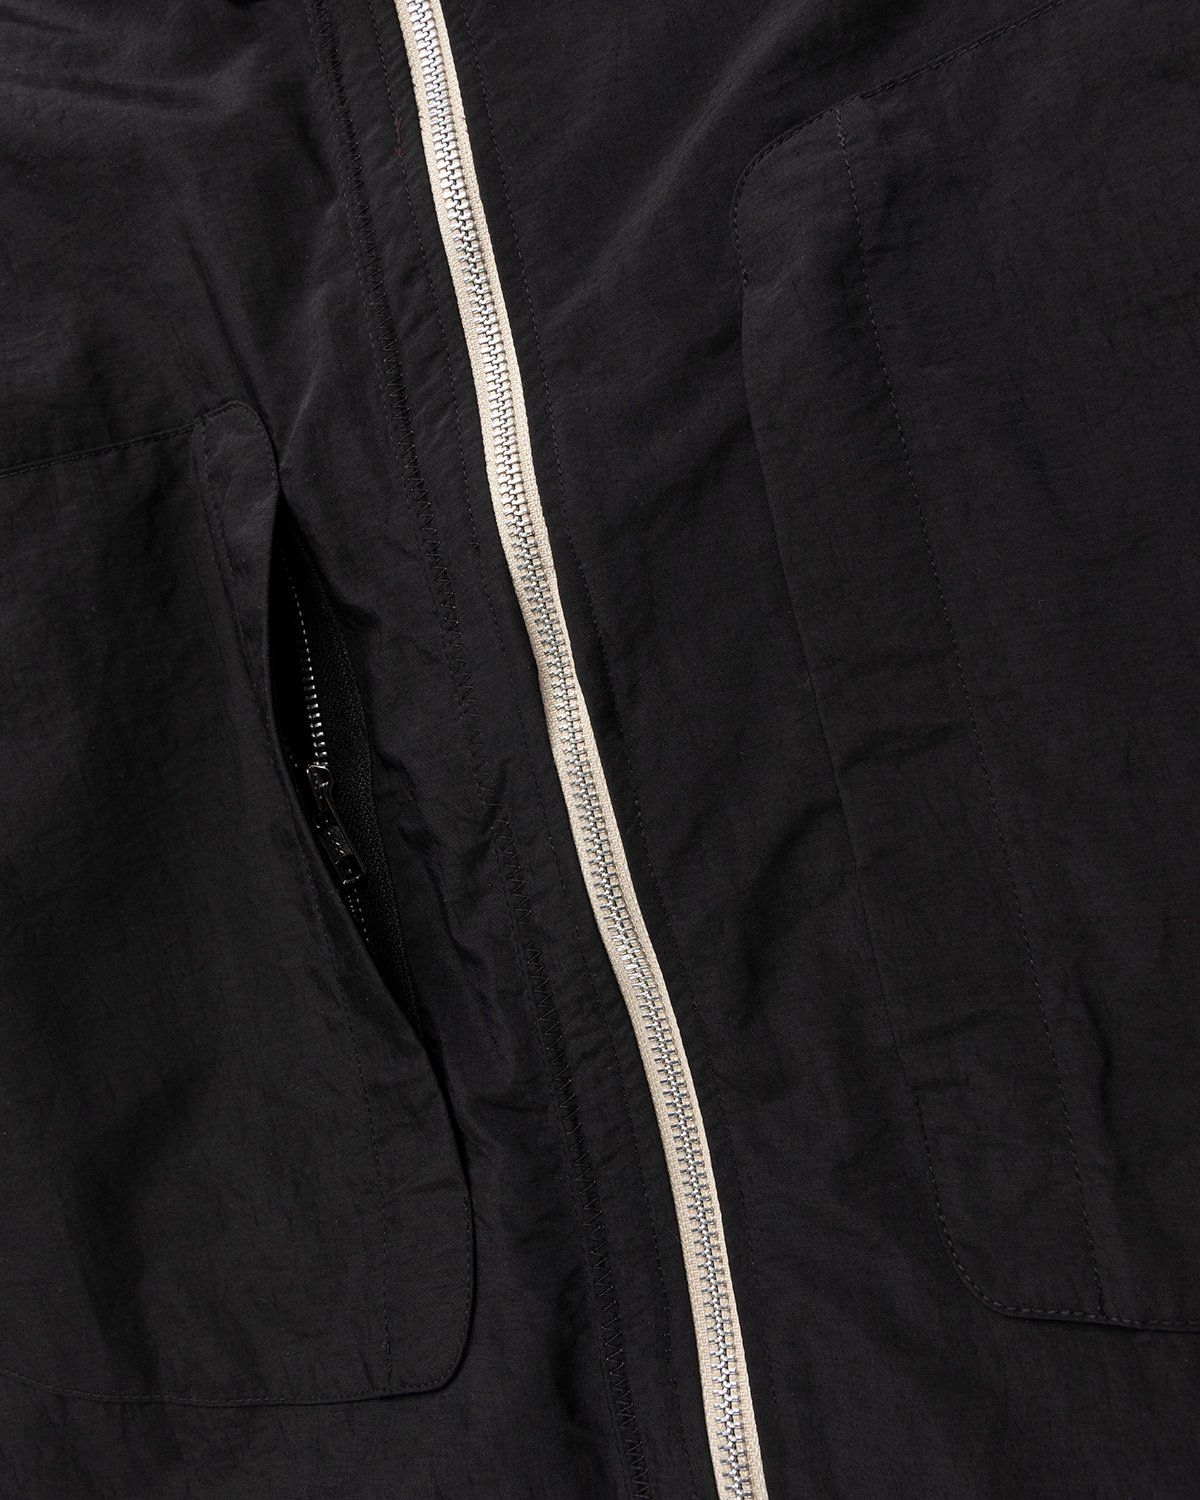 Arnar Mar Jonsson – Texlon Composition Outerwear Jacket Beige Chocolate Black - Windbreakers - Black - Image 8